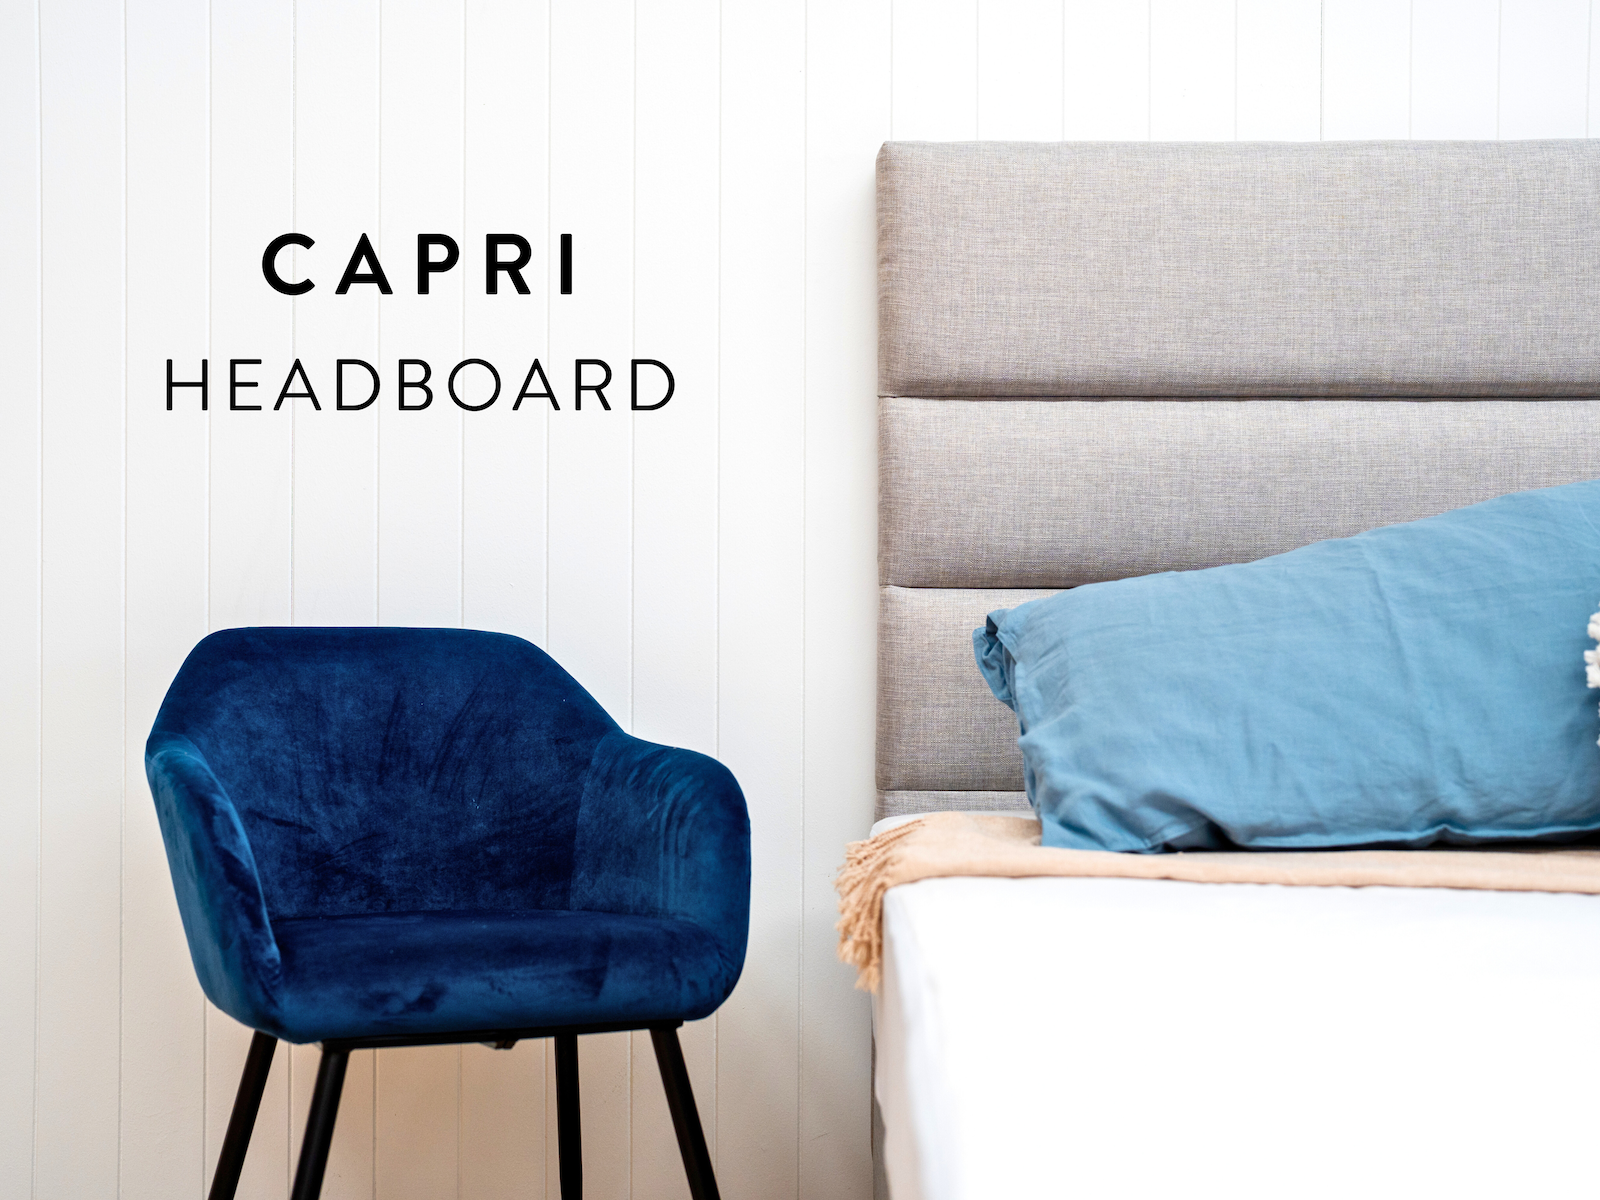 Capri Headboard